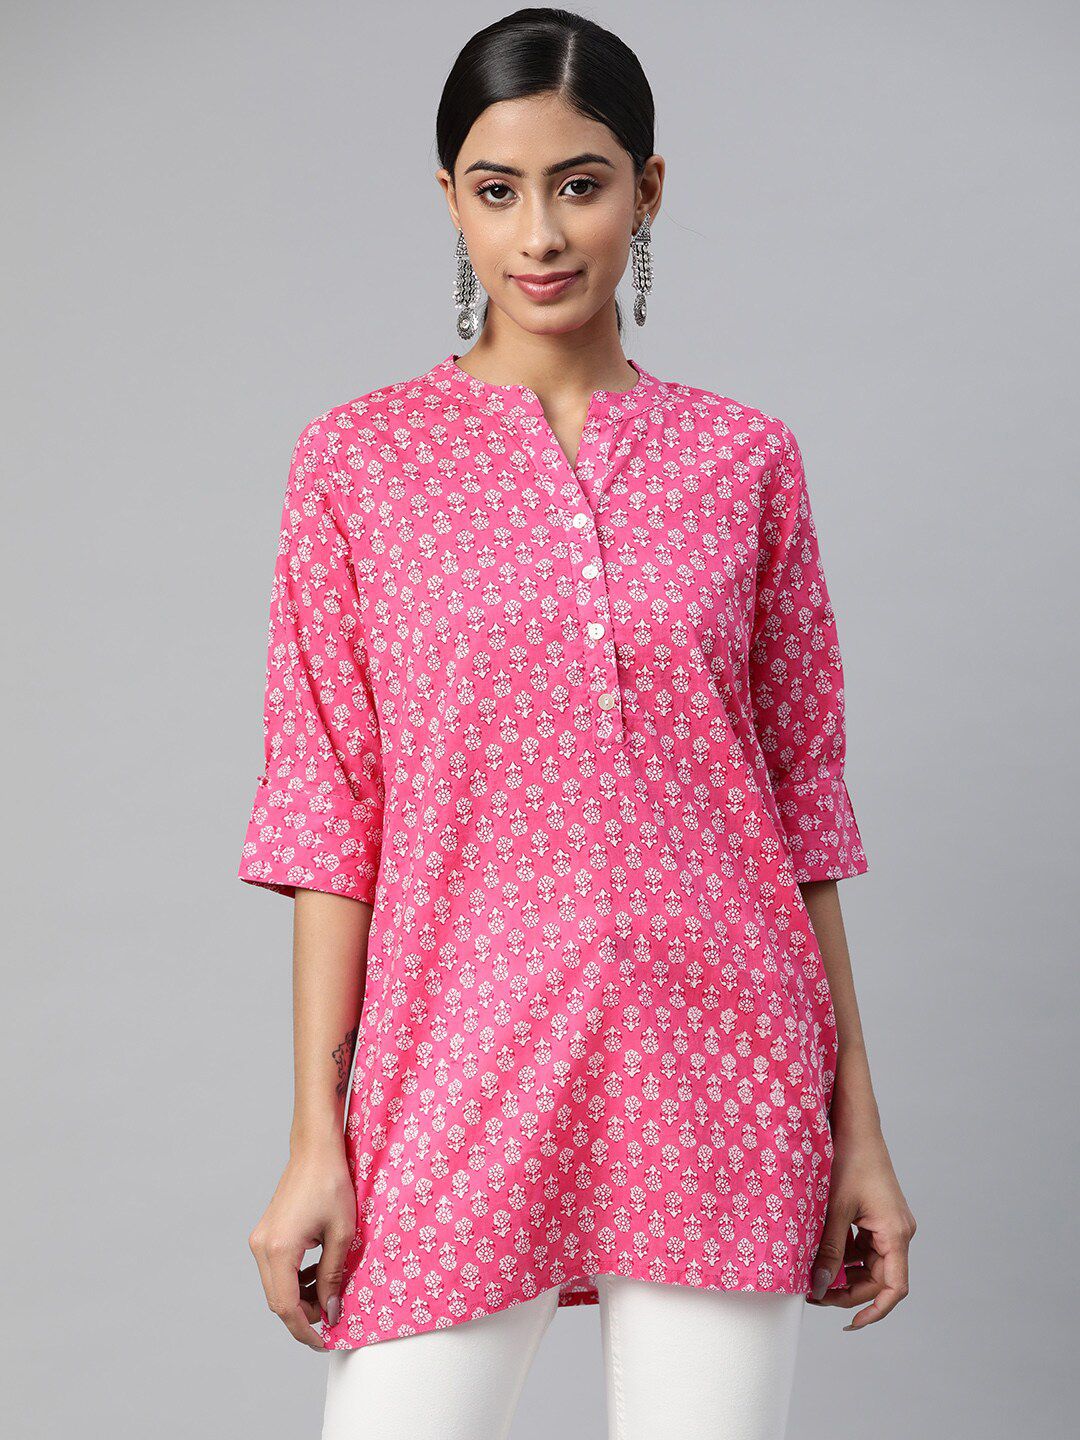 IRIDAA JAIPUR Pink & White Mandarin Collar Printed Tunic Price in India